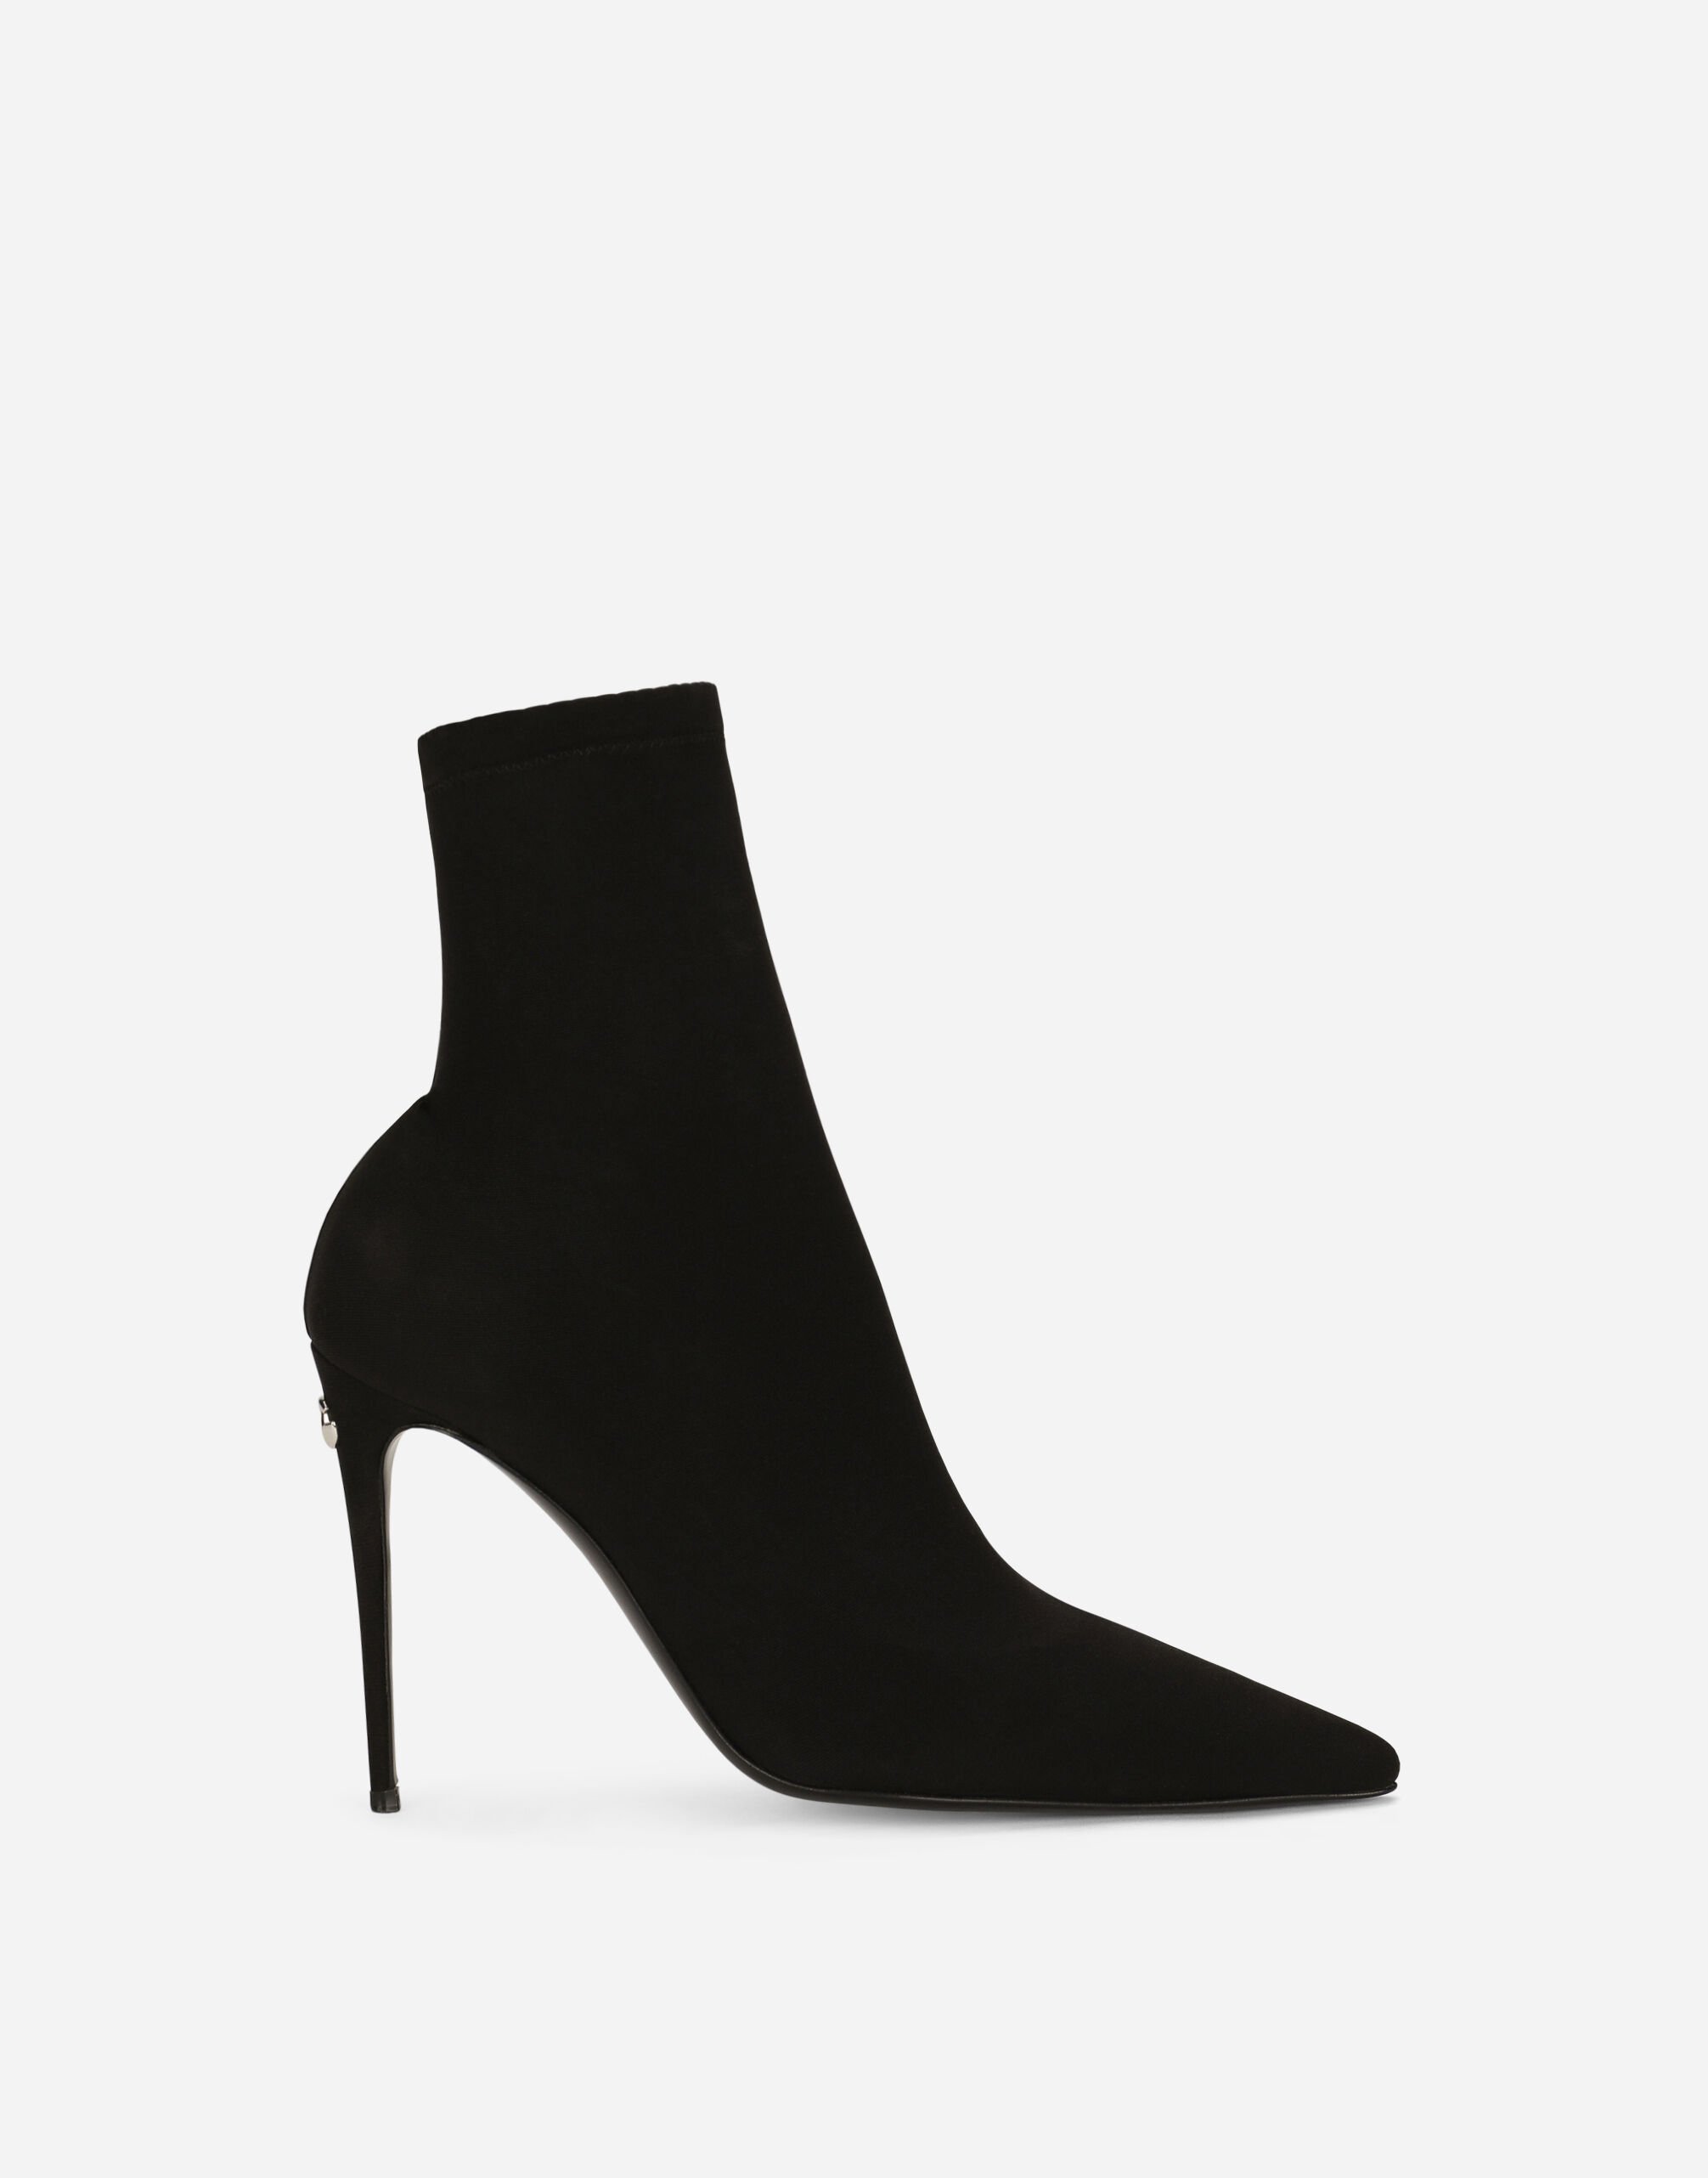 Luxury Women's boots & booties: heeled, combat, ankle | D&G®